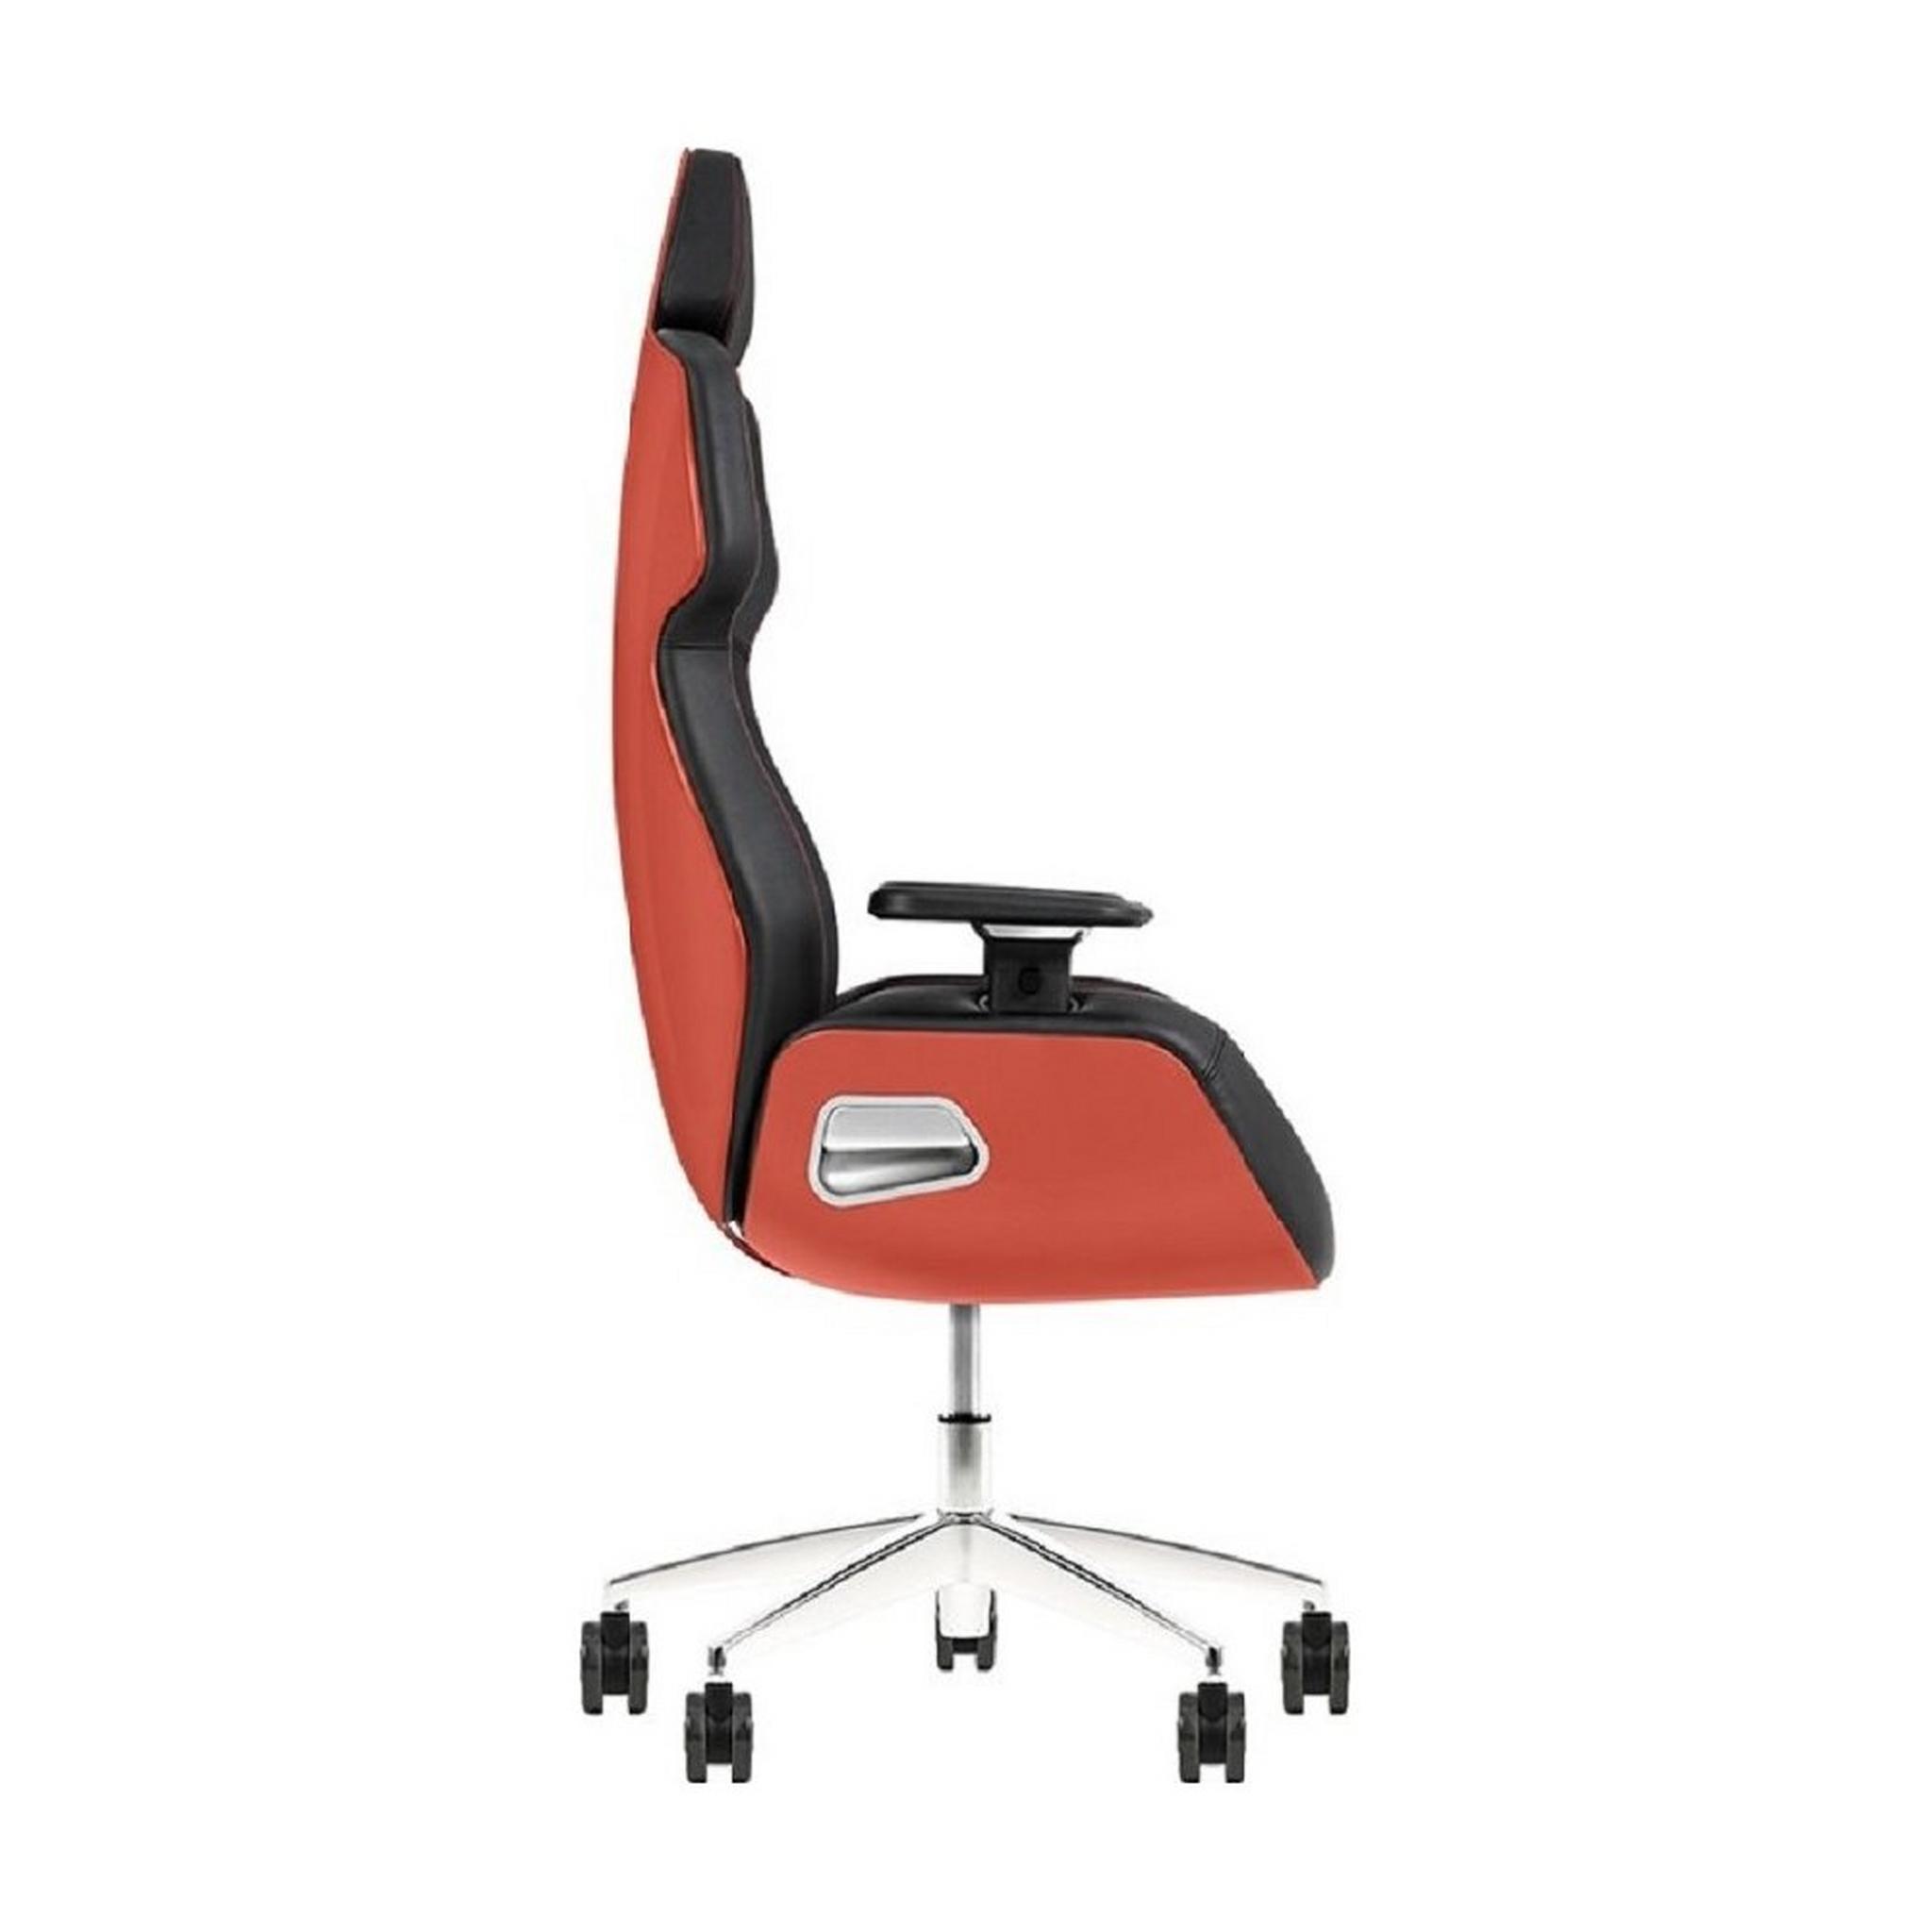 Thermaltake Argent E700 Real Leather Gaming Chair, Design by Studio F. A. Porsche, GGC-ARG-BRLFDL-01– Orange